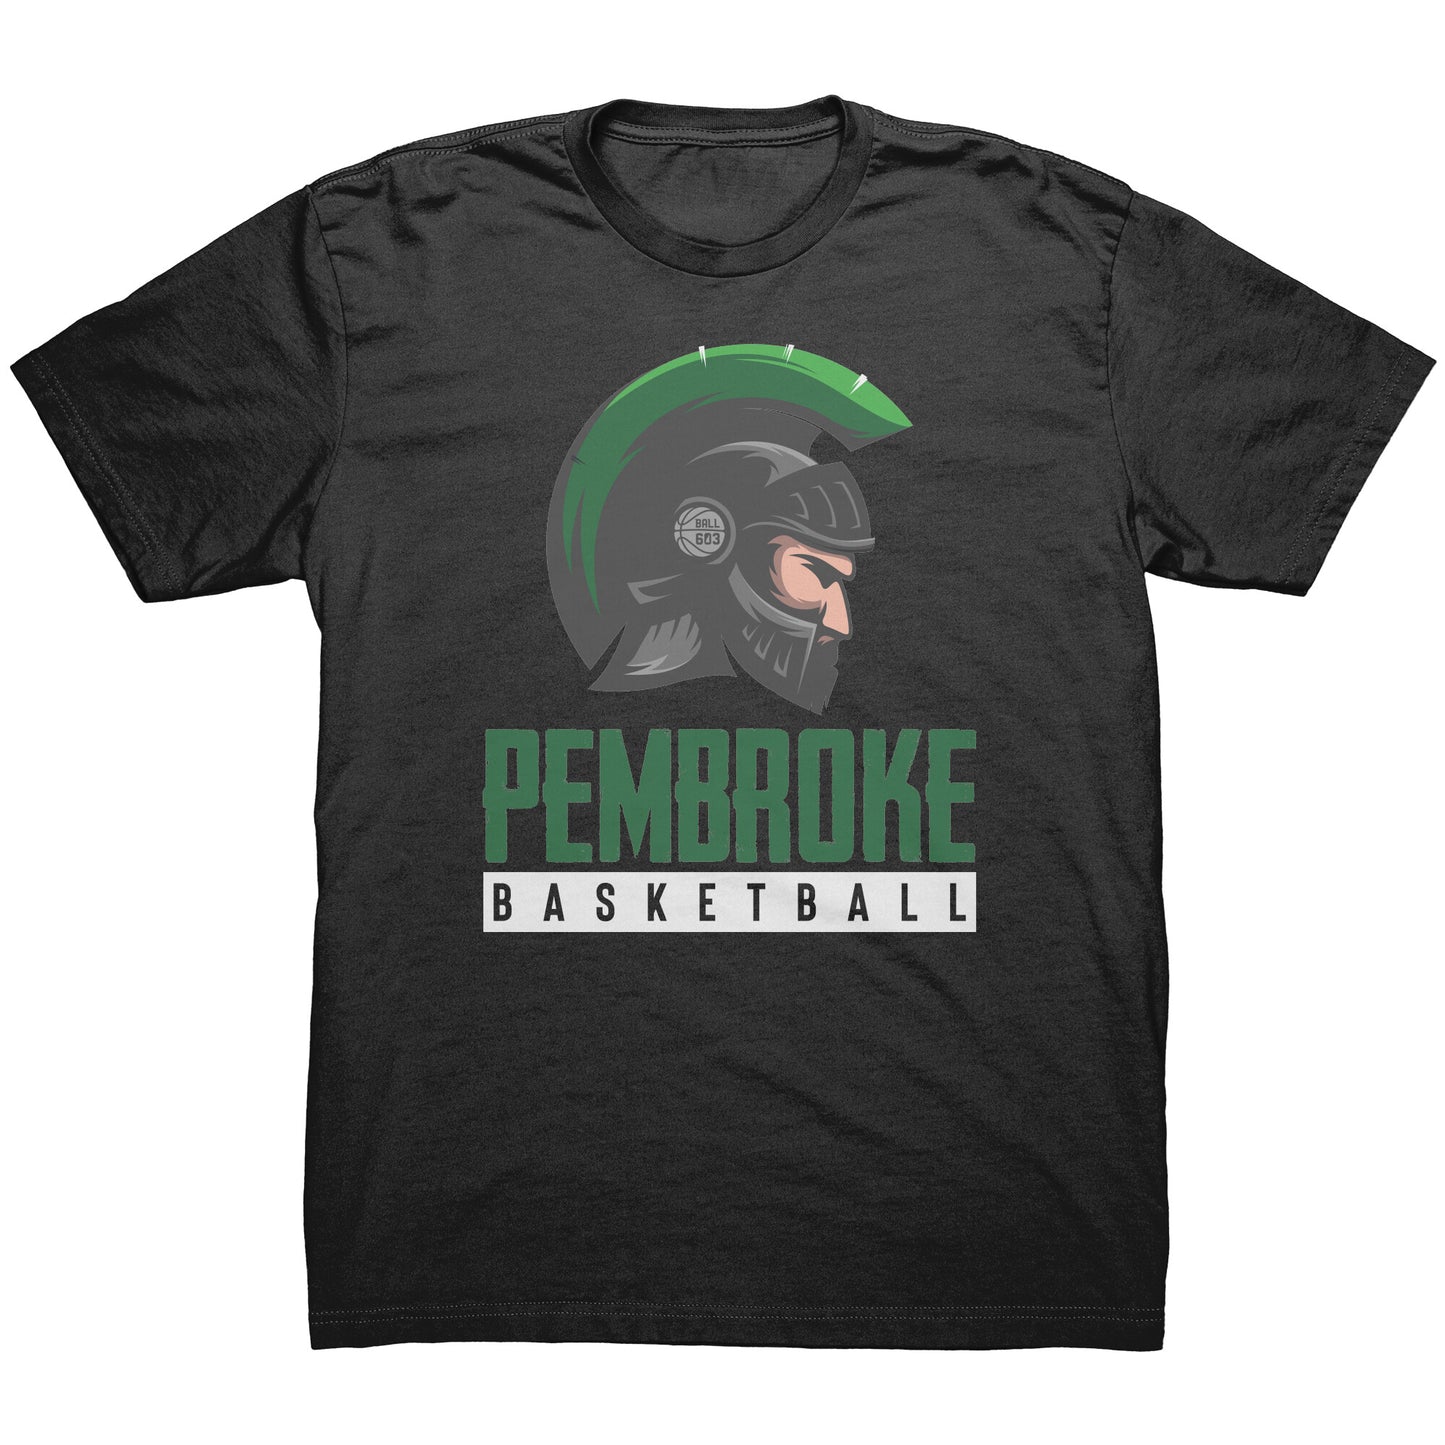 Pembroke Basketball T-Shirt (Men's Cut)